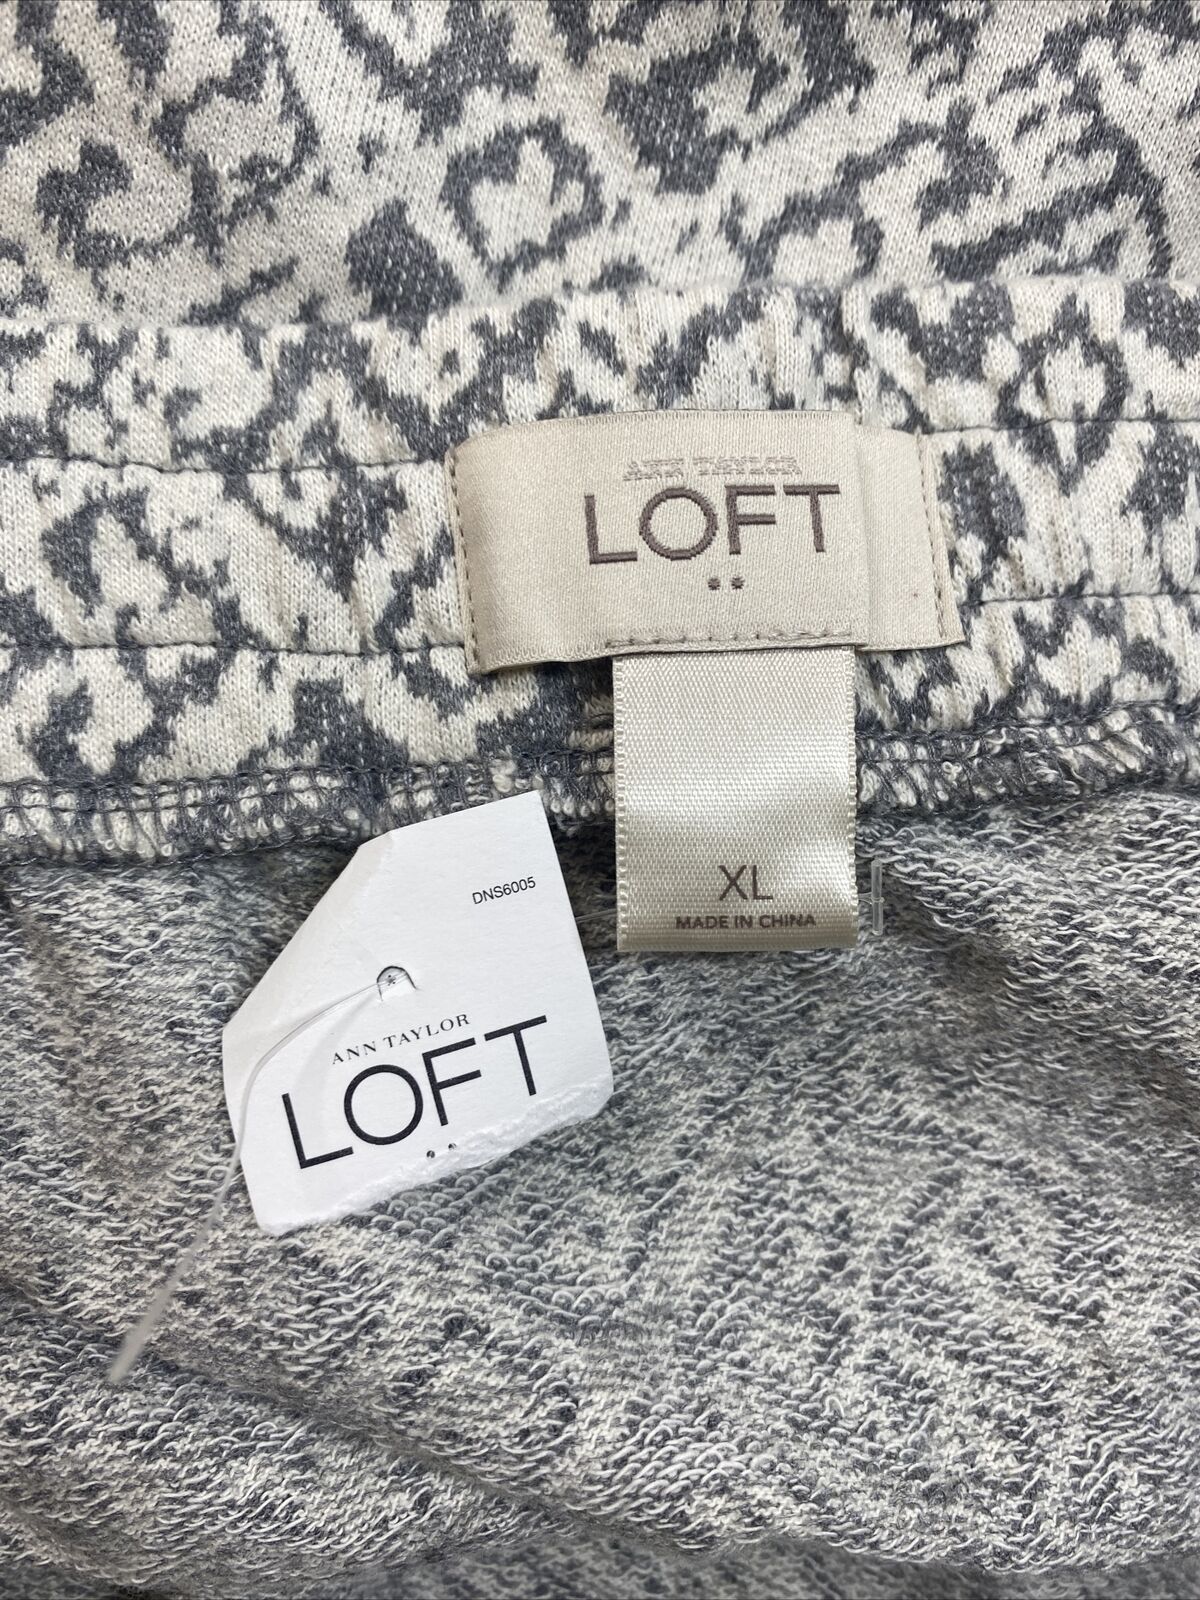 NEW LOFT Women's Gray/White Stretch Waist Pull On Straight Skirt - XL